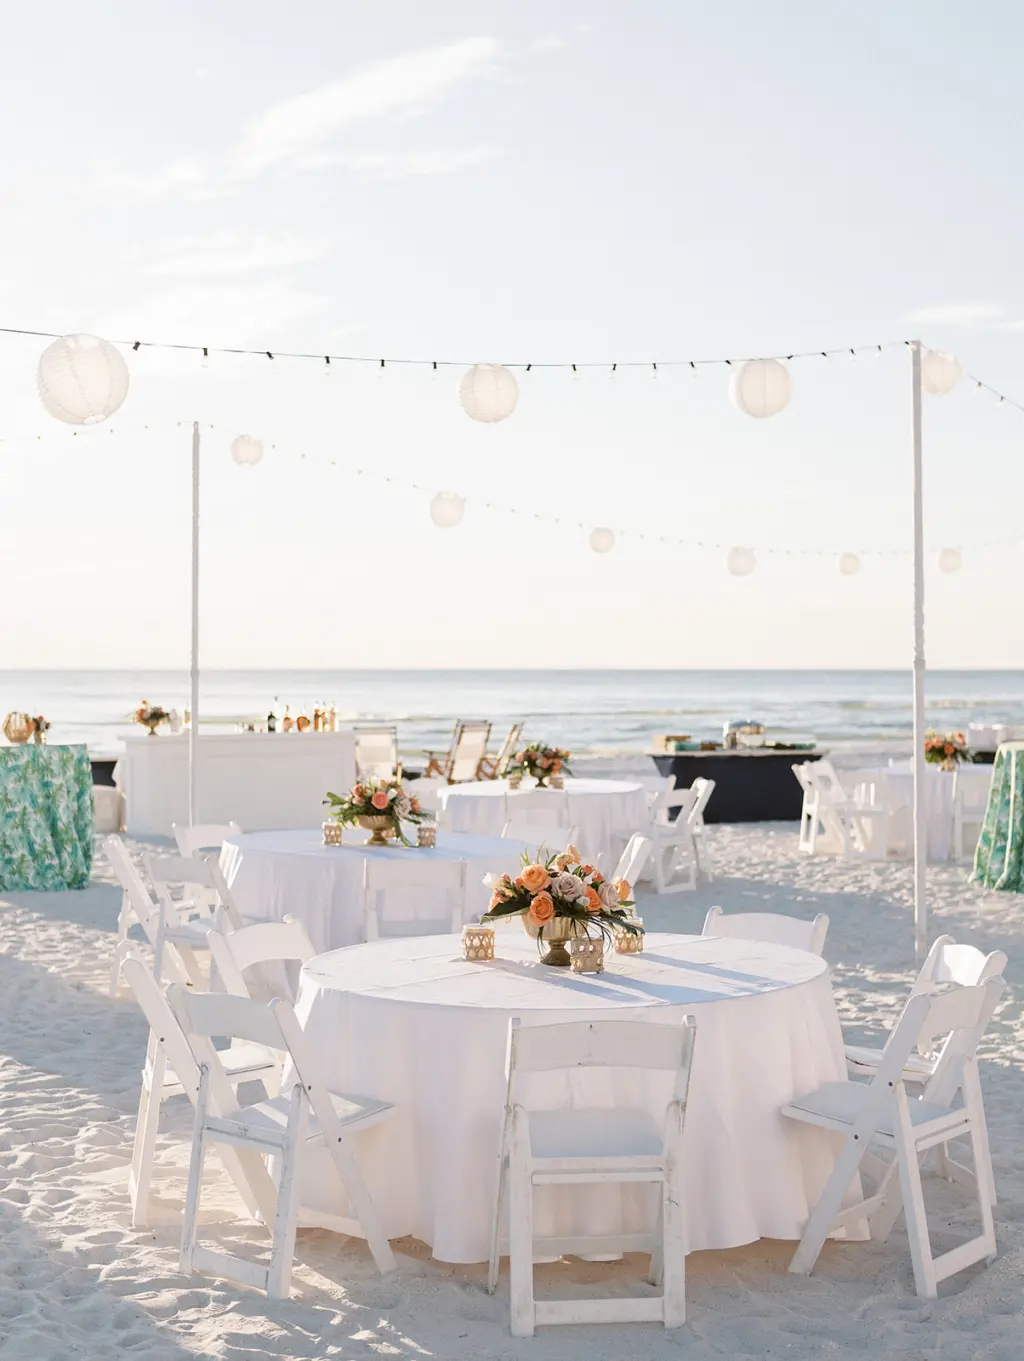 Outdoor Sarasota Destination Wedding Venue Longboat Key Club - Justin DeMutiis Photography